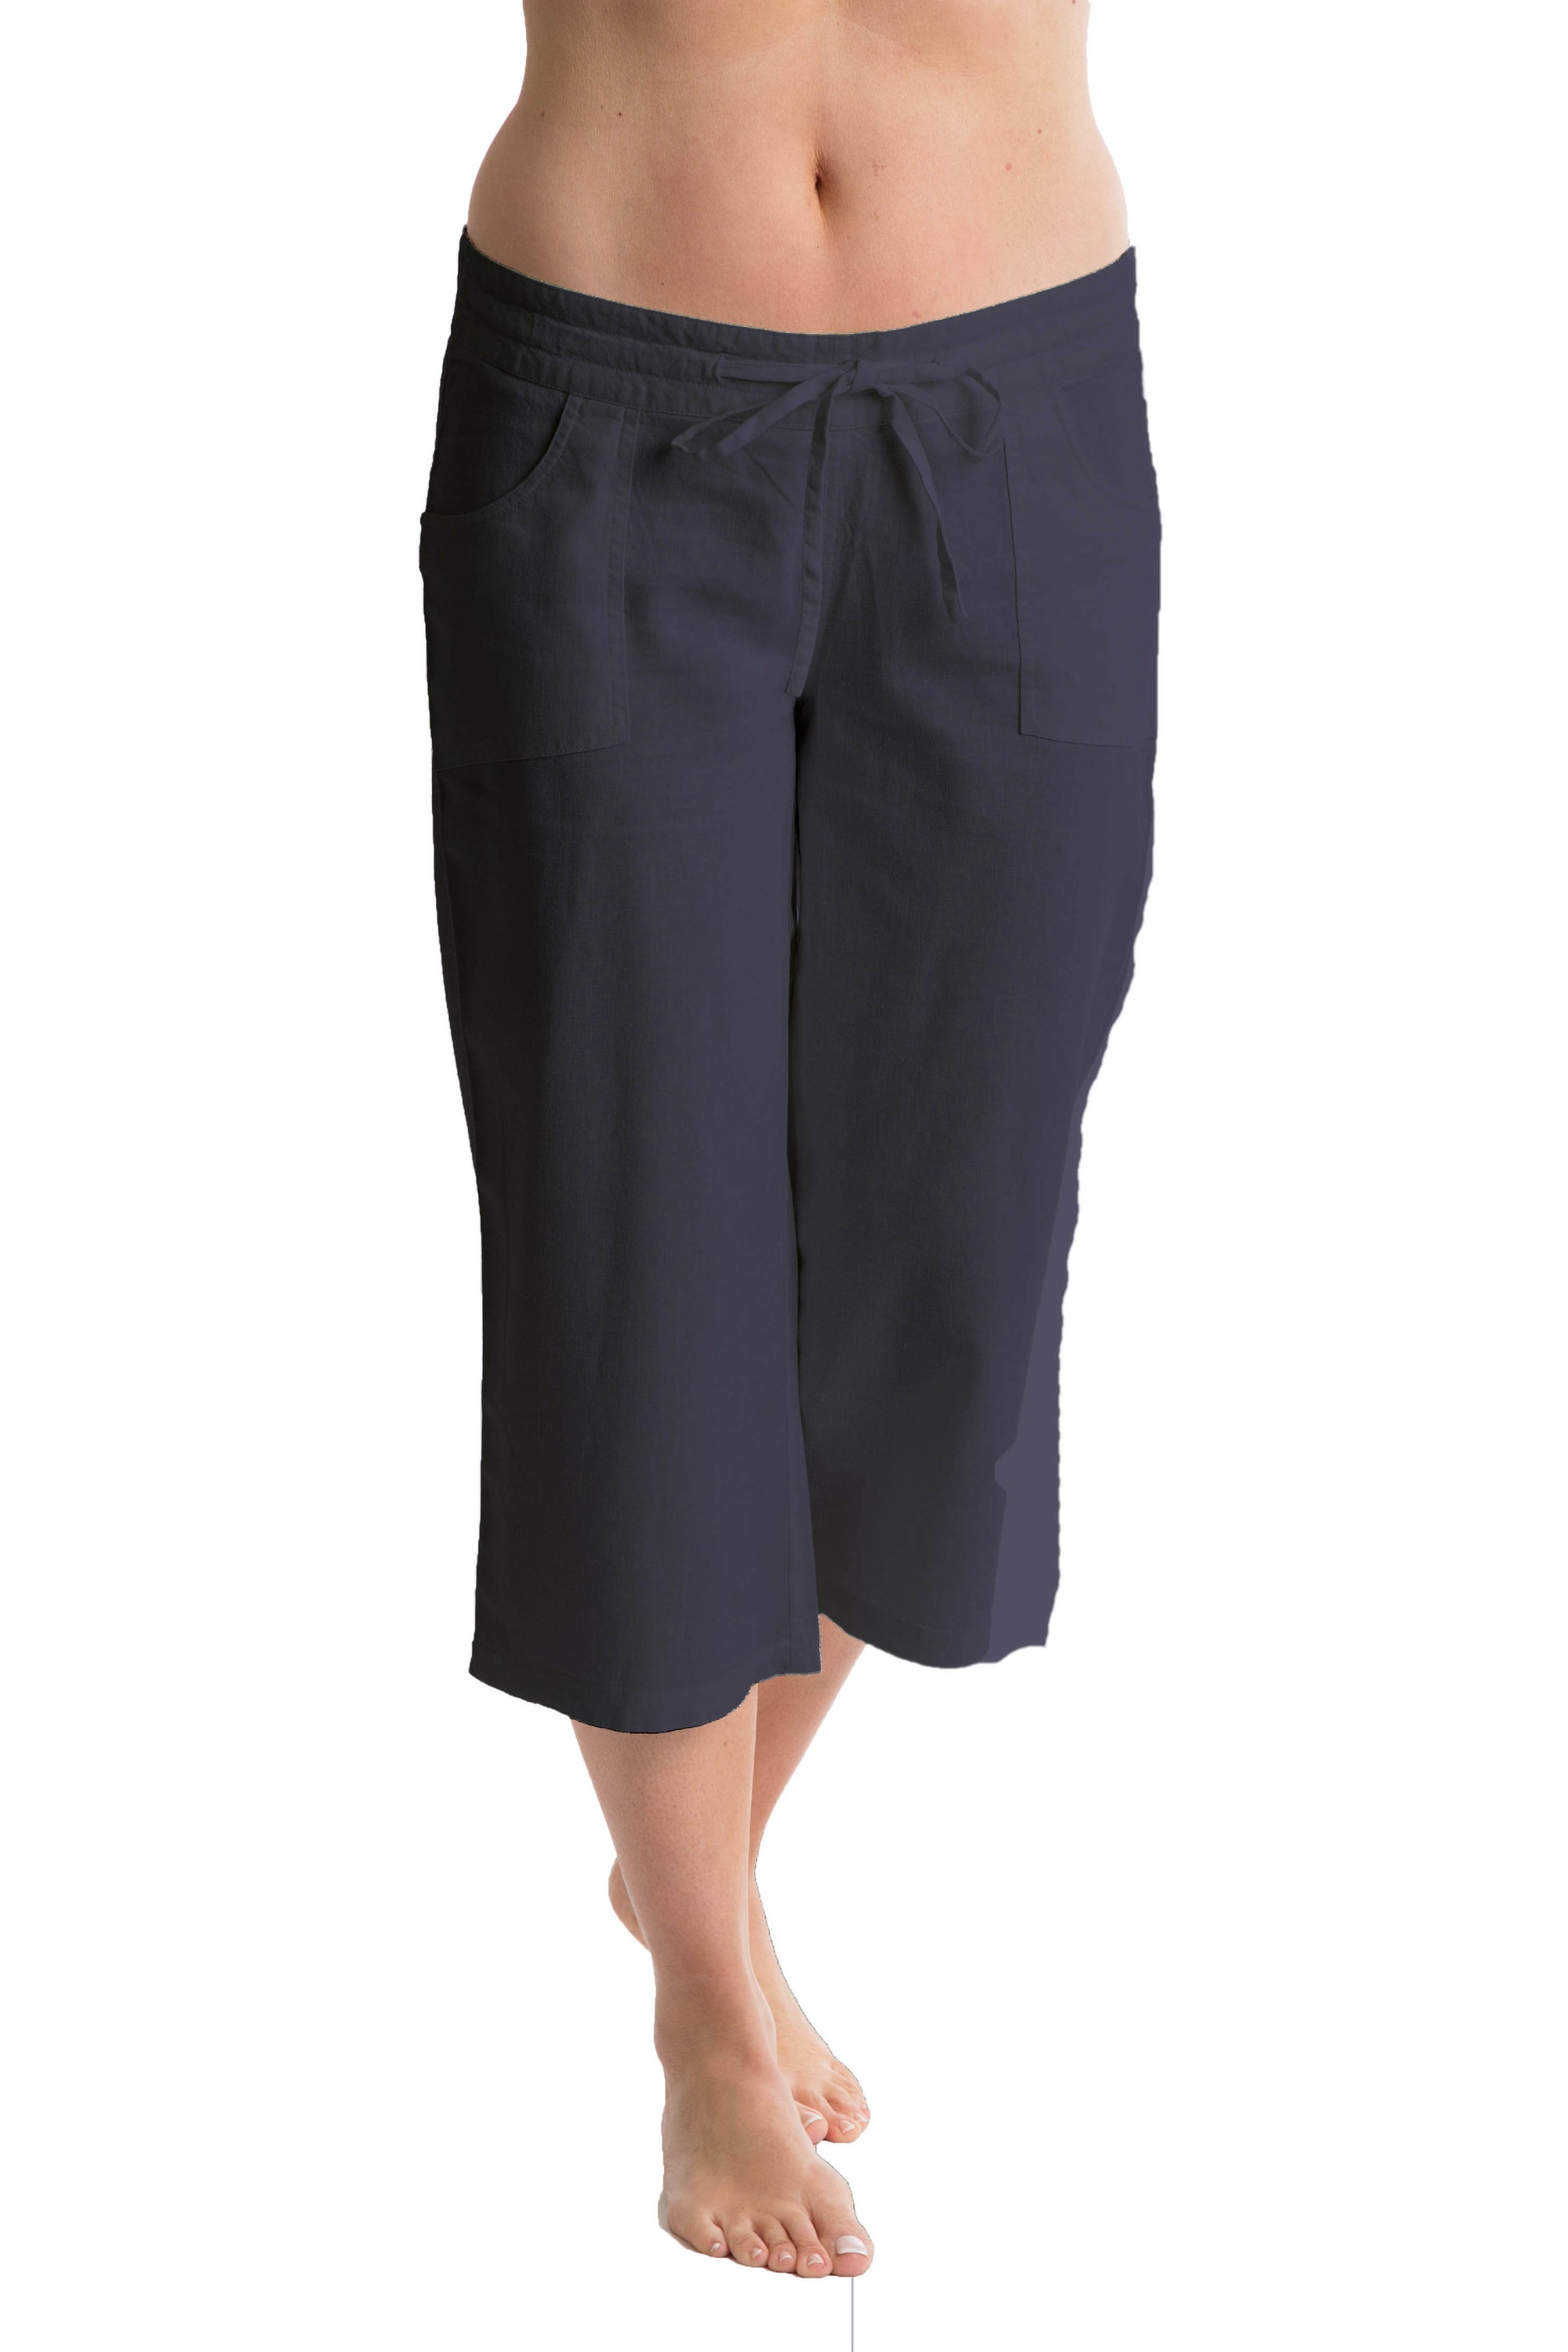 AFR Women Capri Trousers Cropped Pants Ladies 34 Three Quarter Length  Stretch Pull On Elasticated UK SIZE 1024 Grey 10  Amazoncouk Fashion